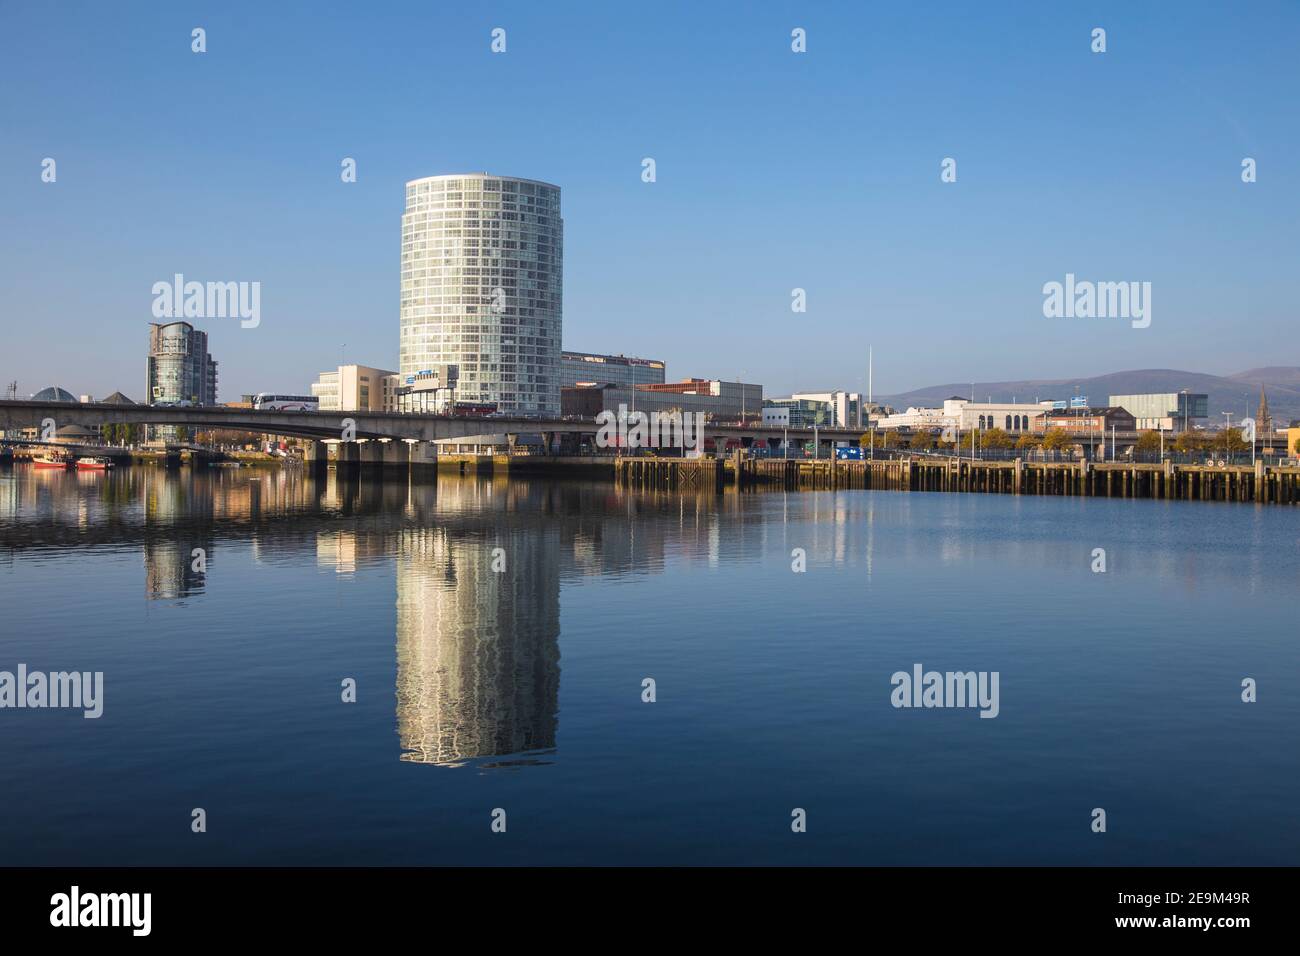 Großbritannien, Nordirland, Belfast, Queen Elizabeth Bridge und Obel Tower Complex Stockfoto